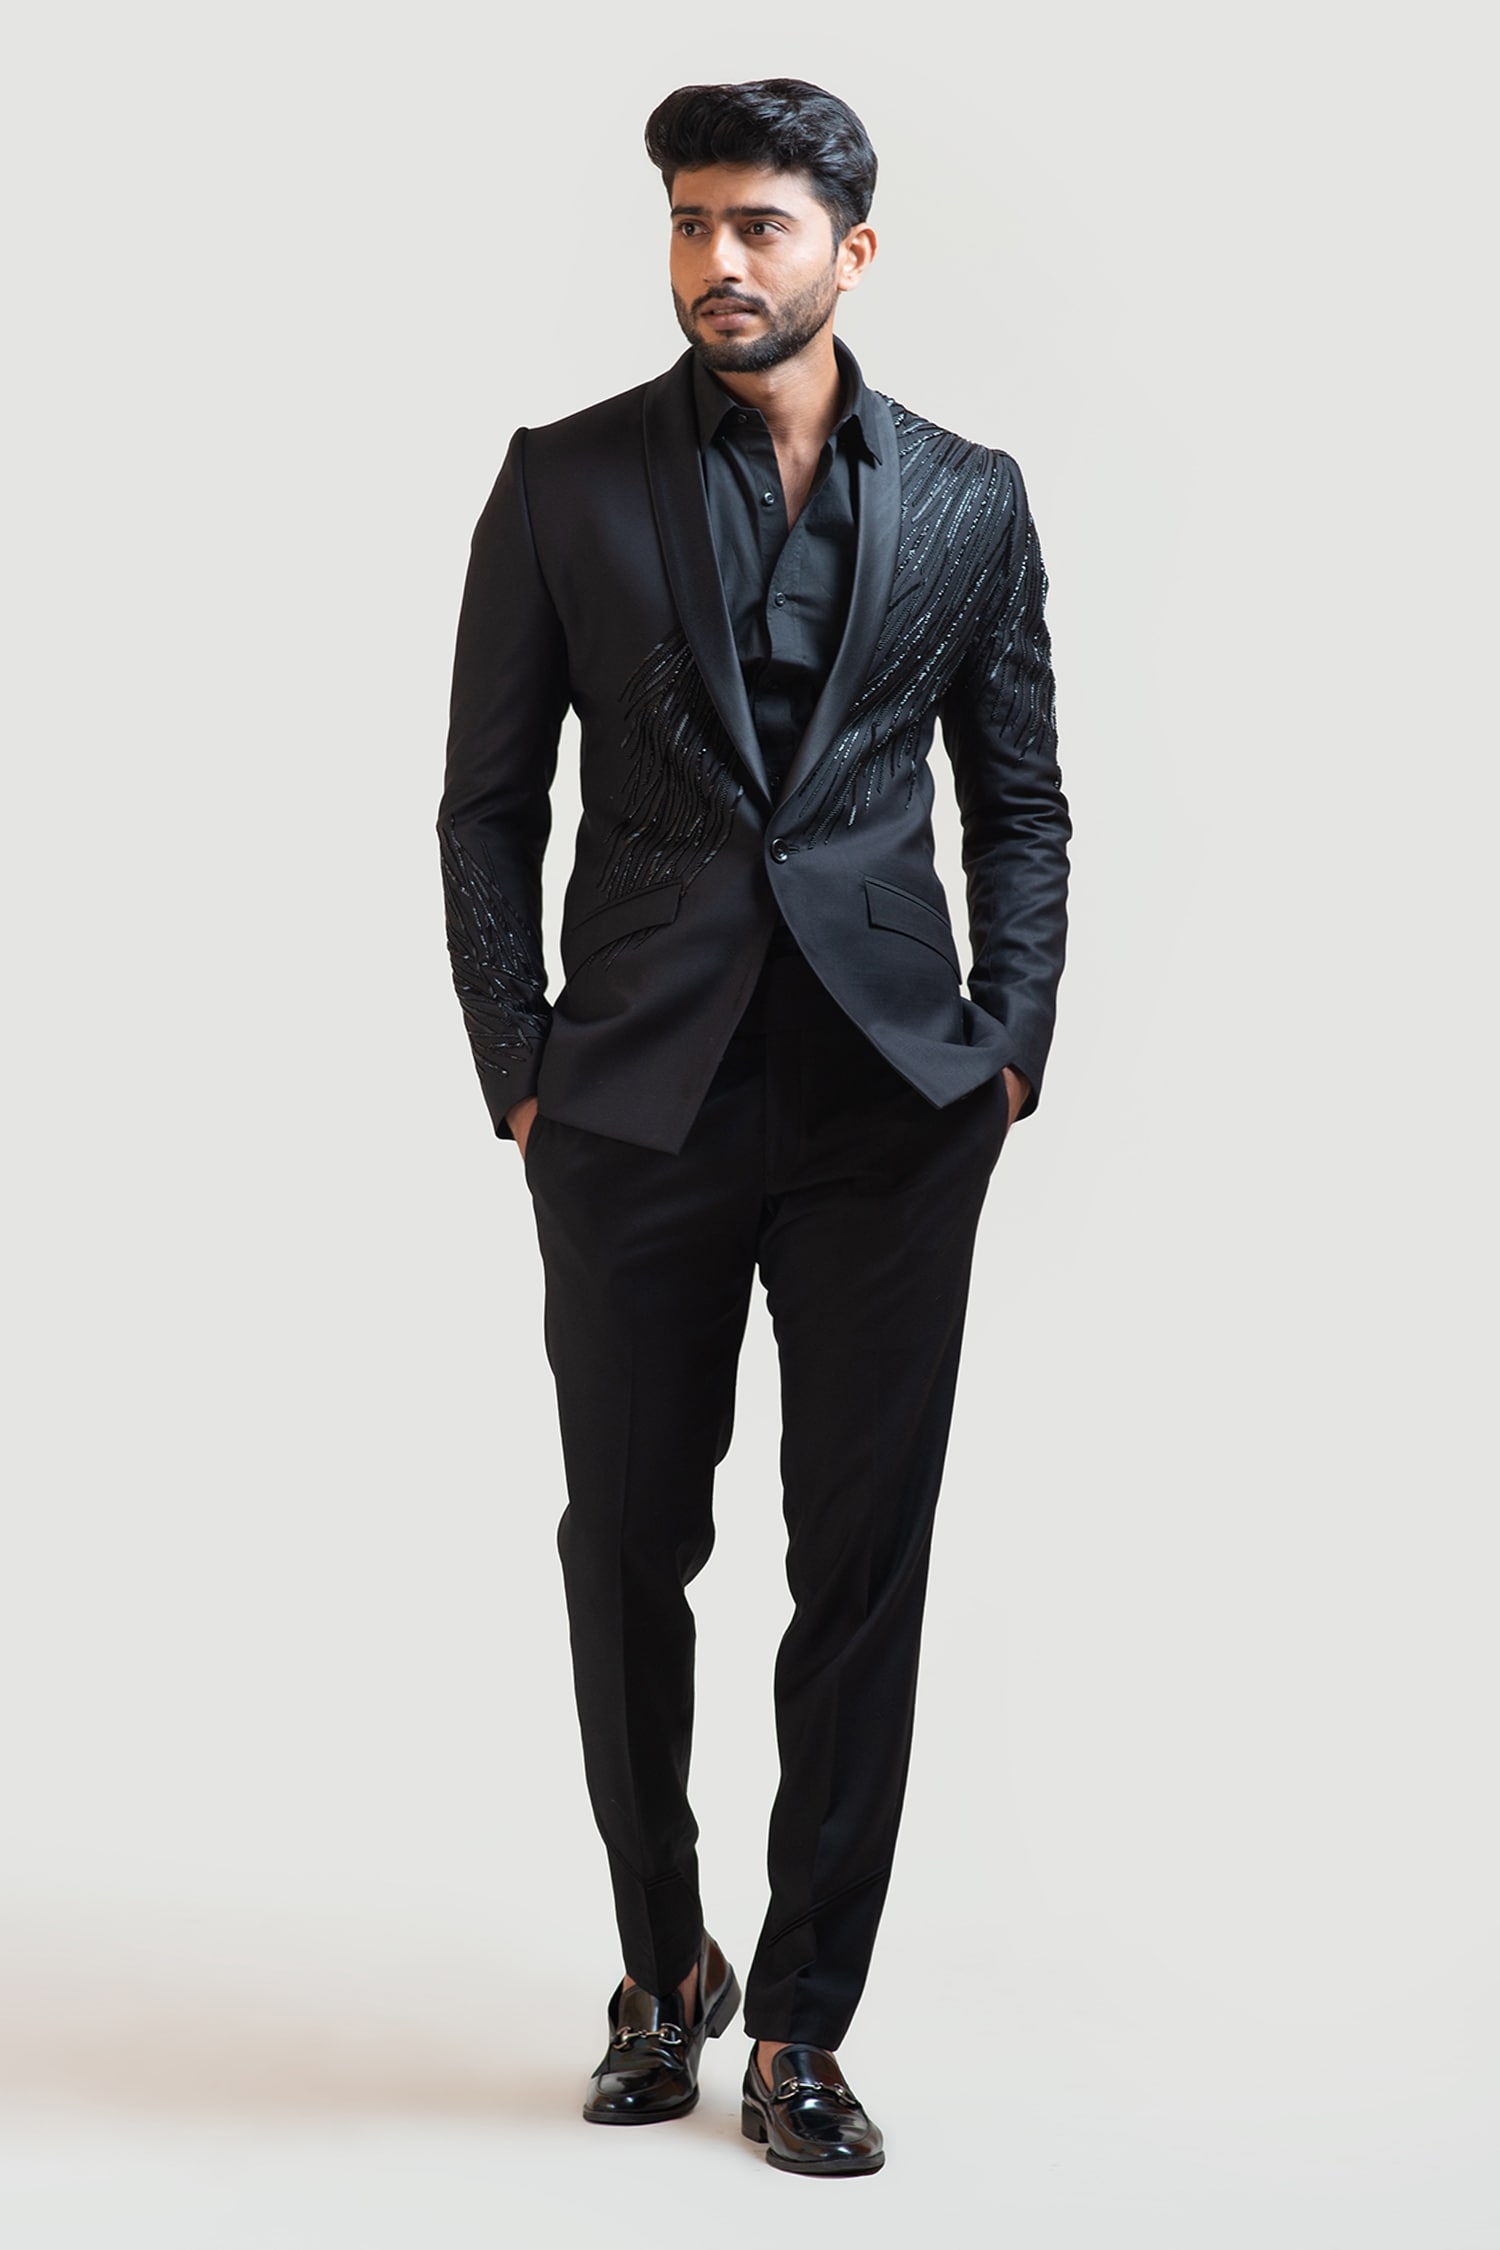 Men Business Formal 2 Pieces Tuxedo Suit Blazer Jacket  Trousers Set   Fruugo IN